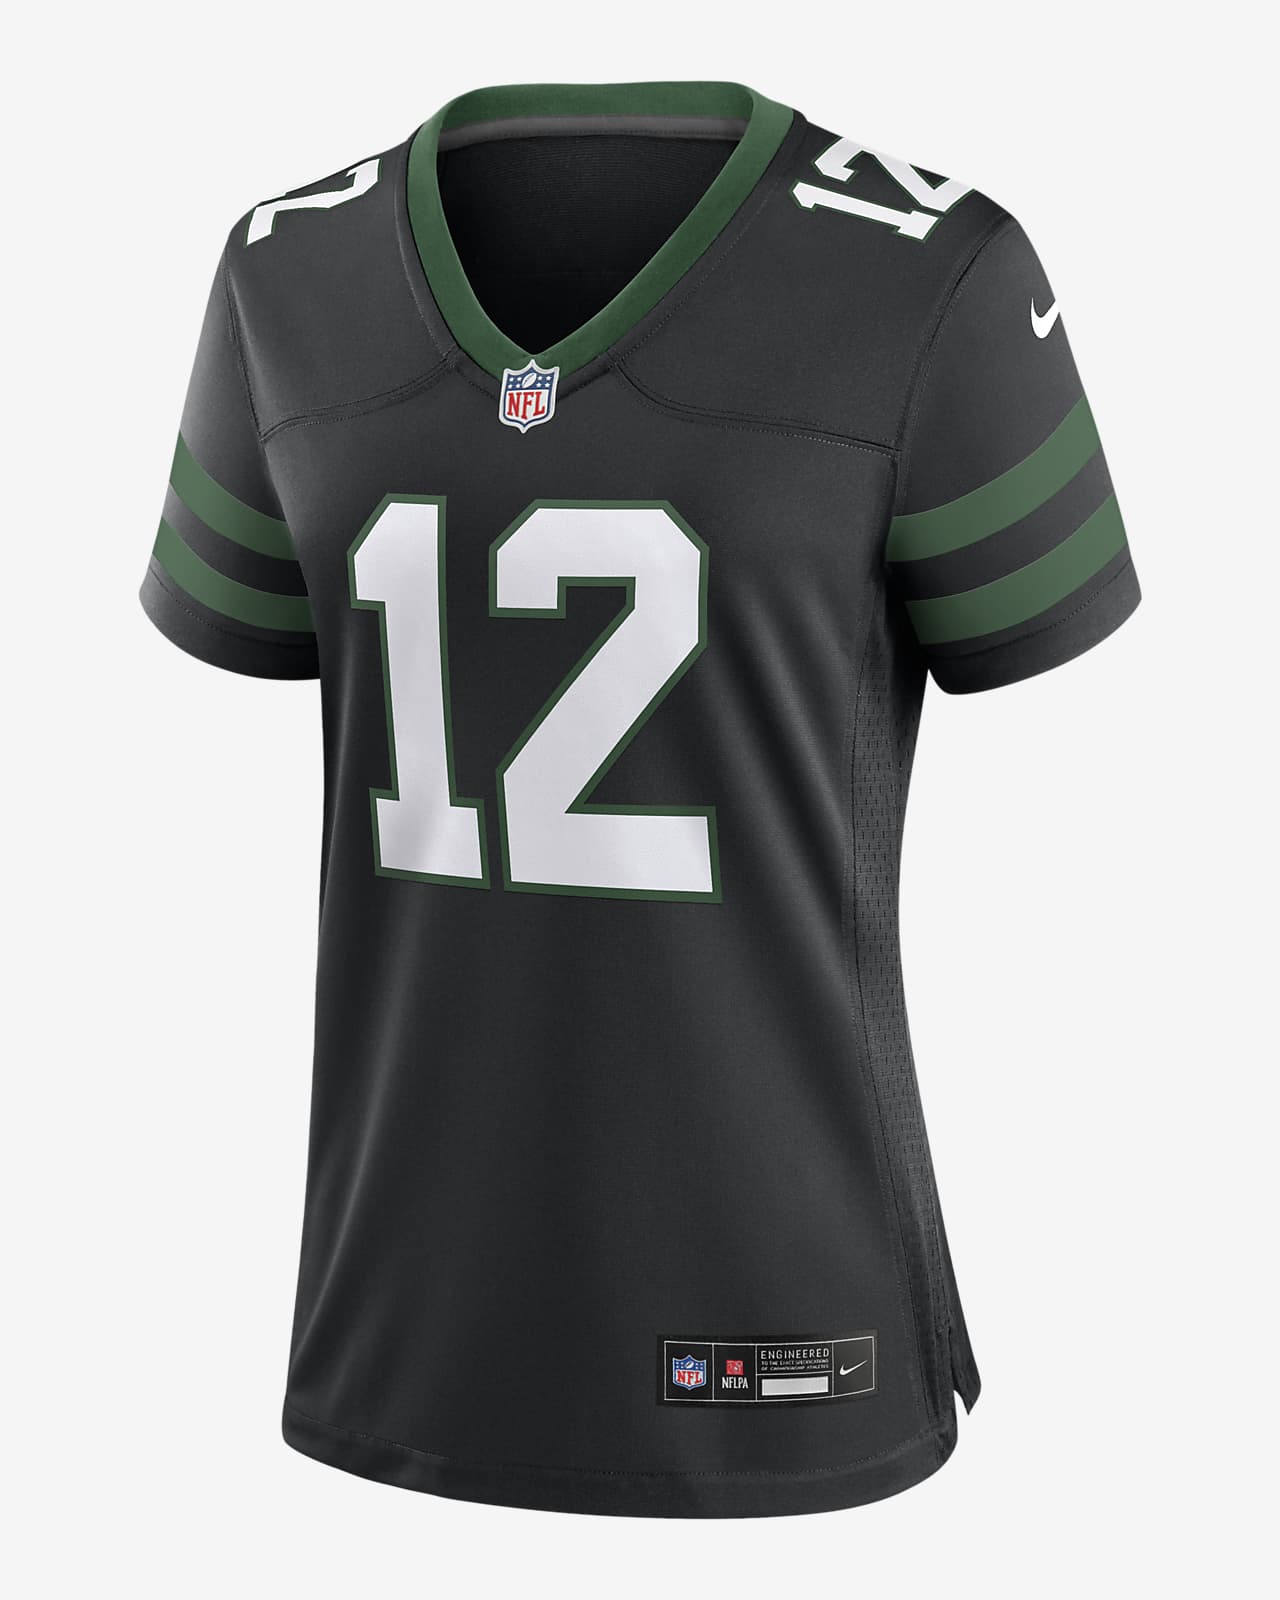 Joe Namath New York Jets Women's Nike NFL Game Football Jersey